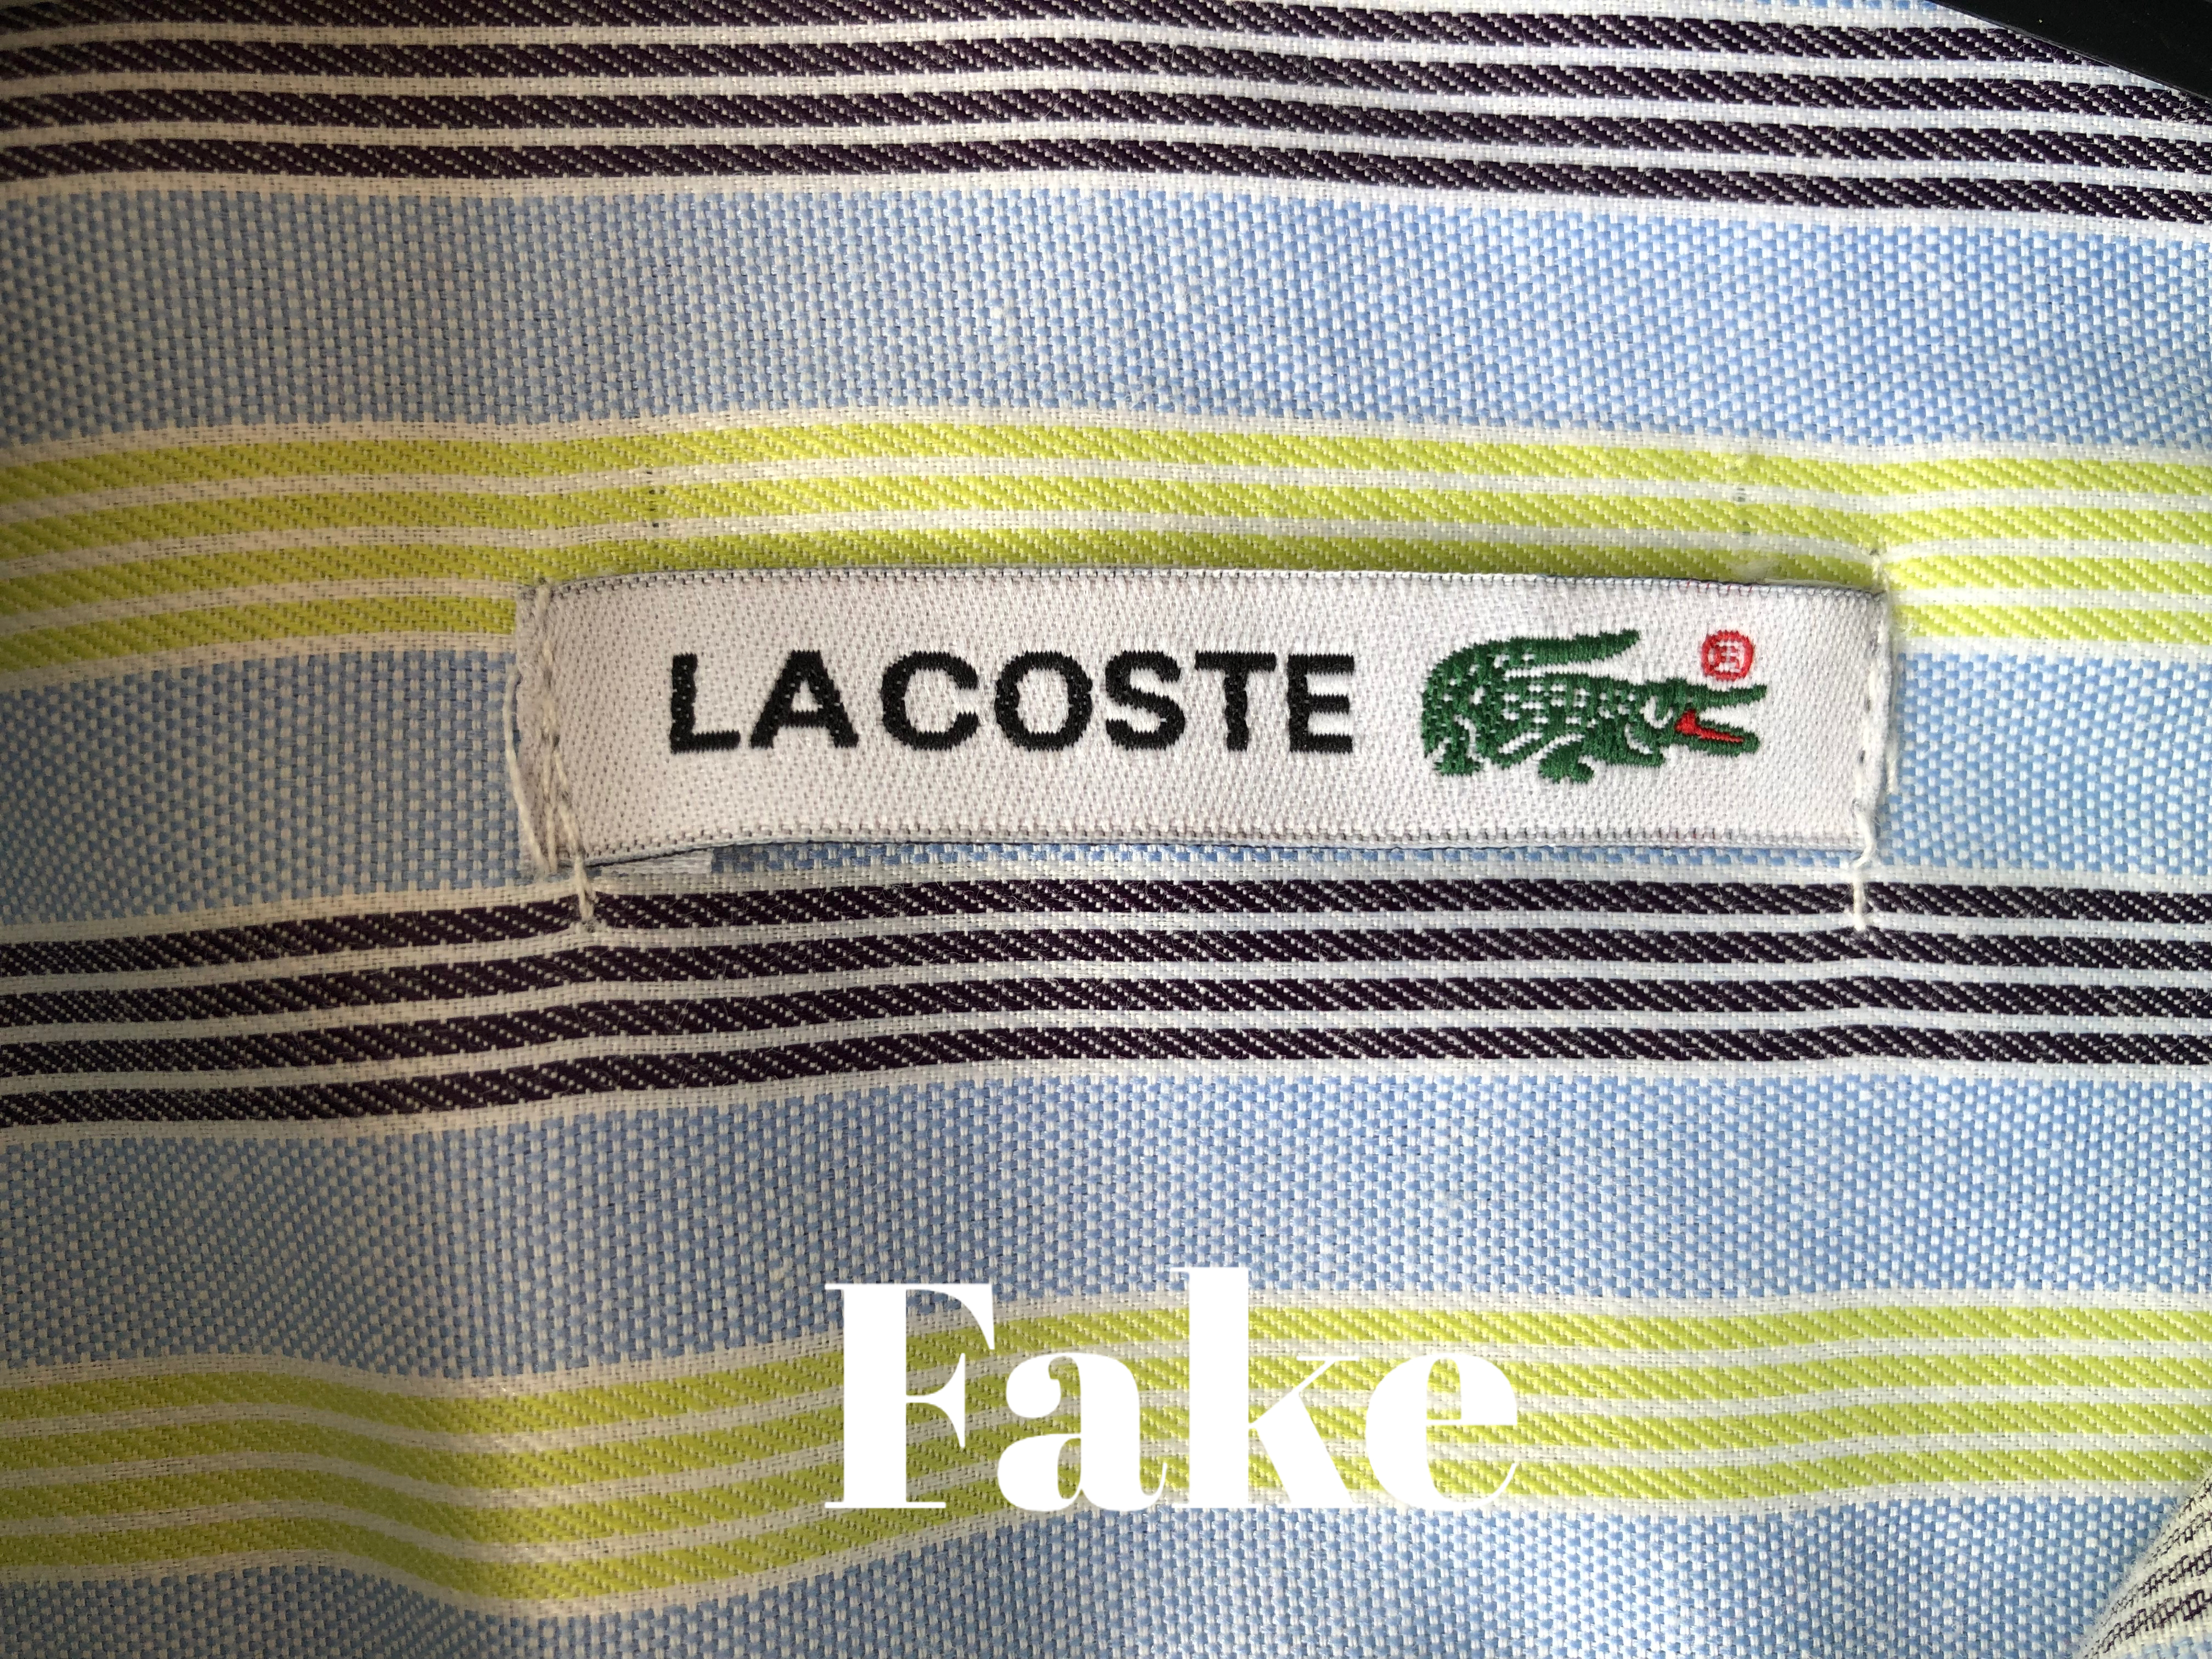 lacoste original logo vs fake